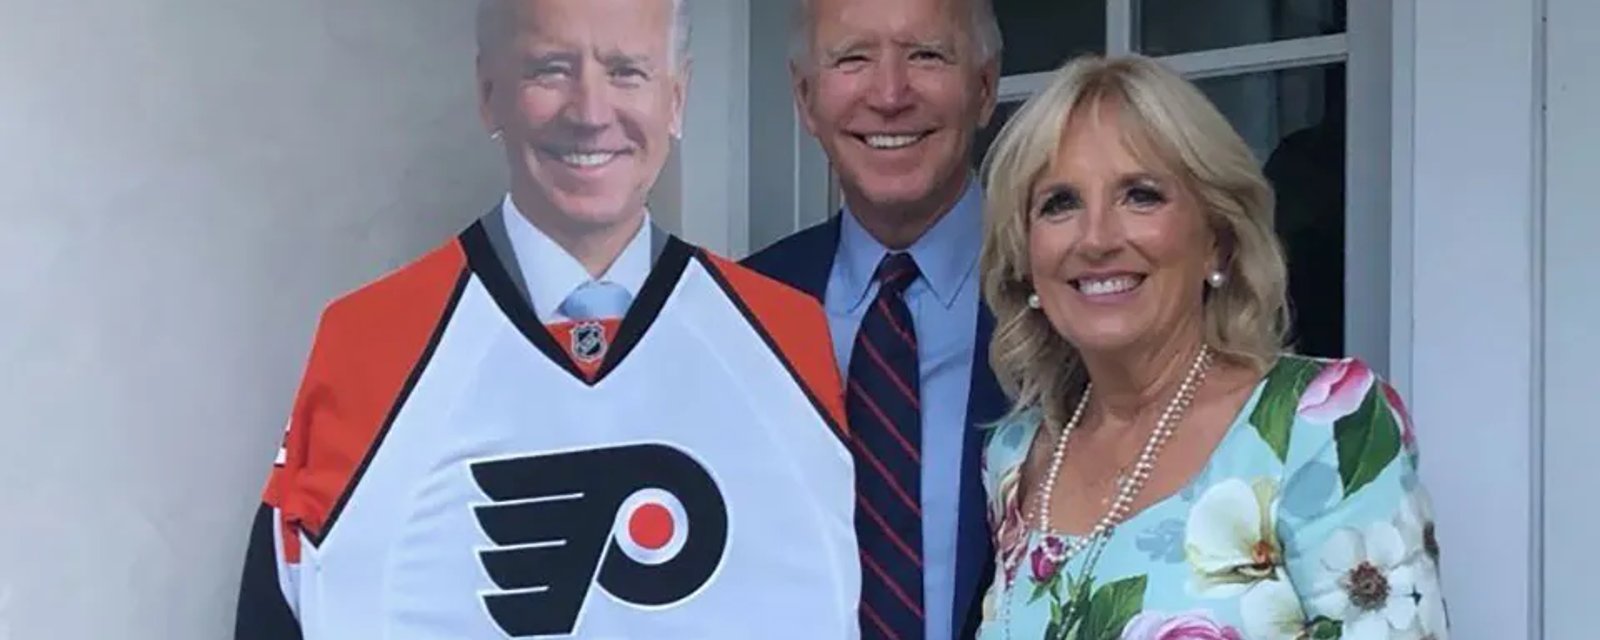 Joe Biden lance une flèche aux Maple Leafs